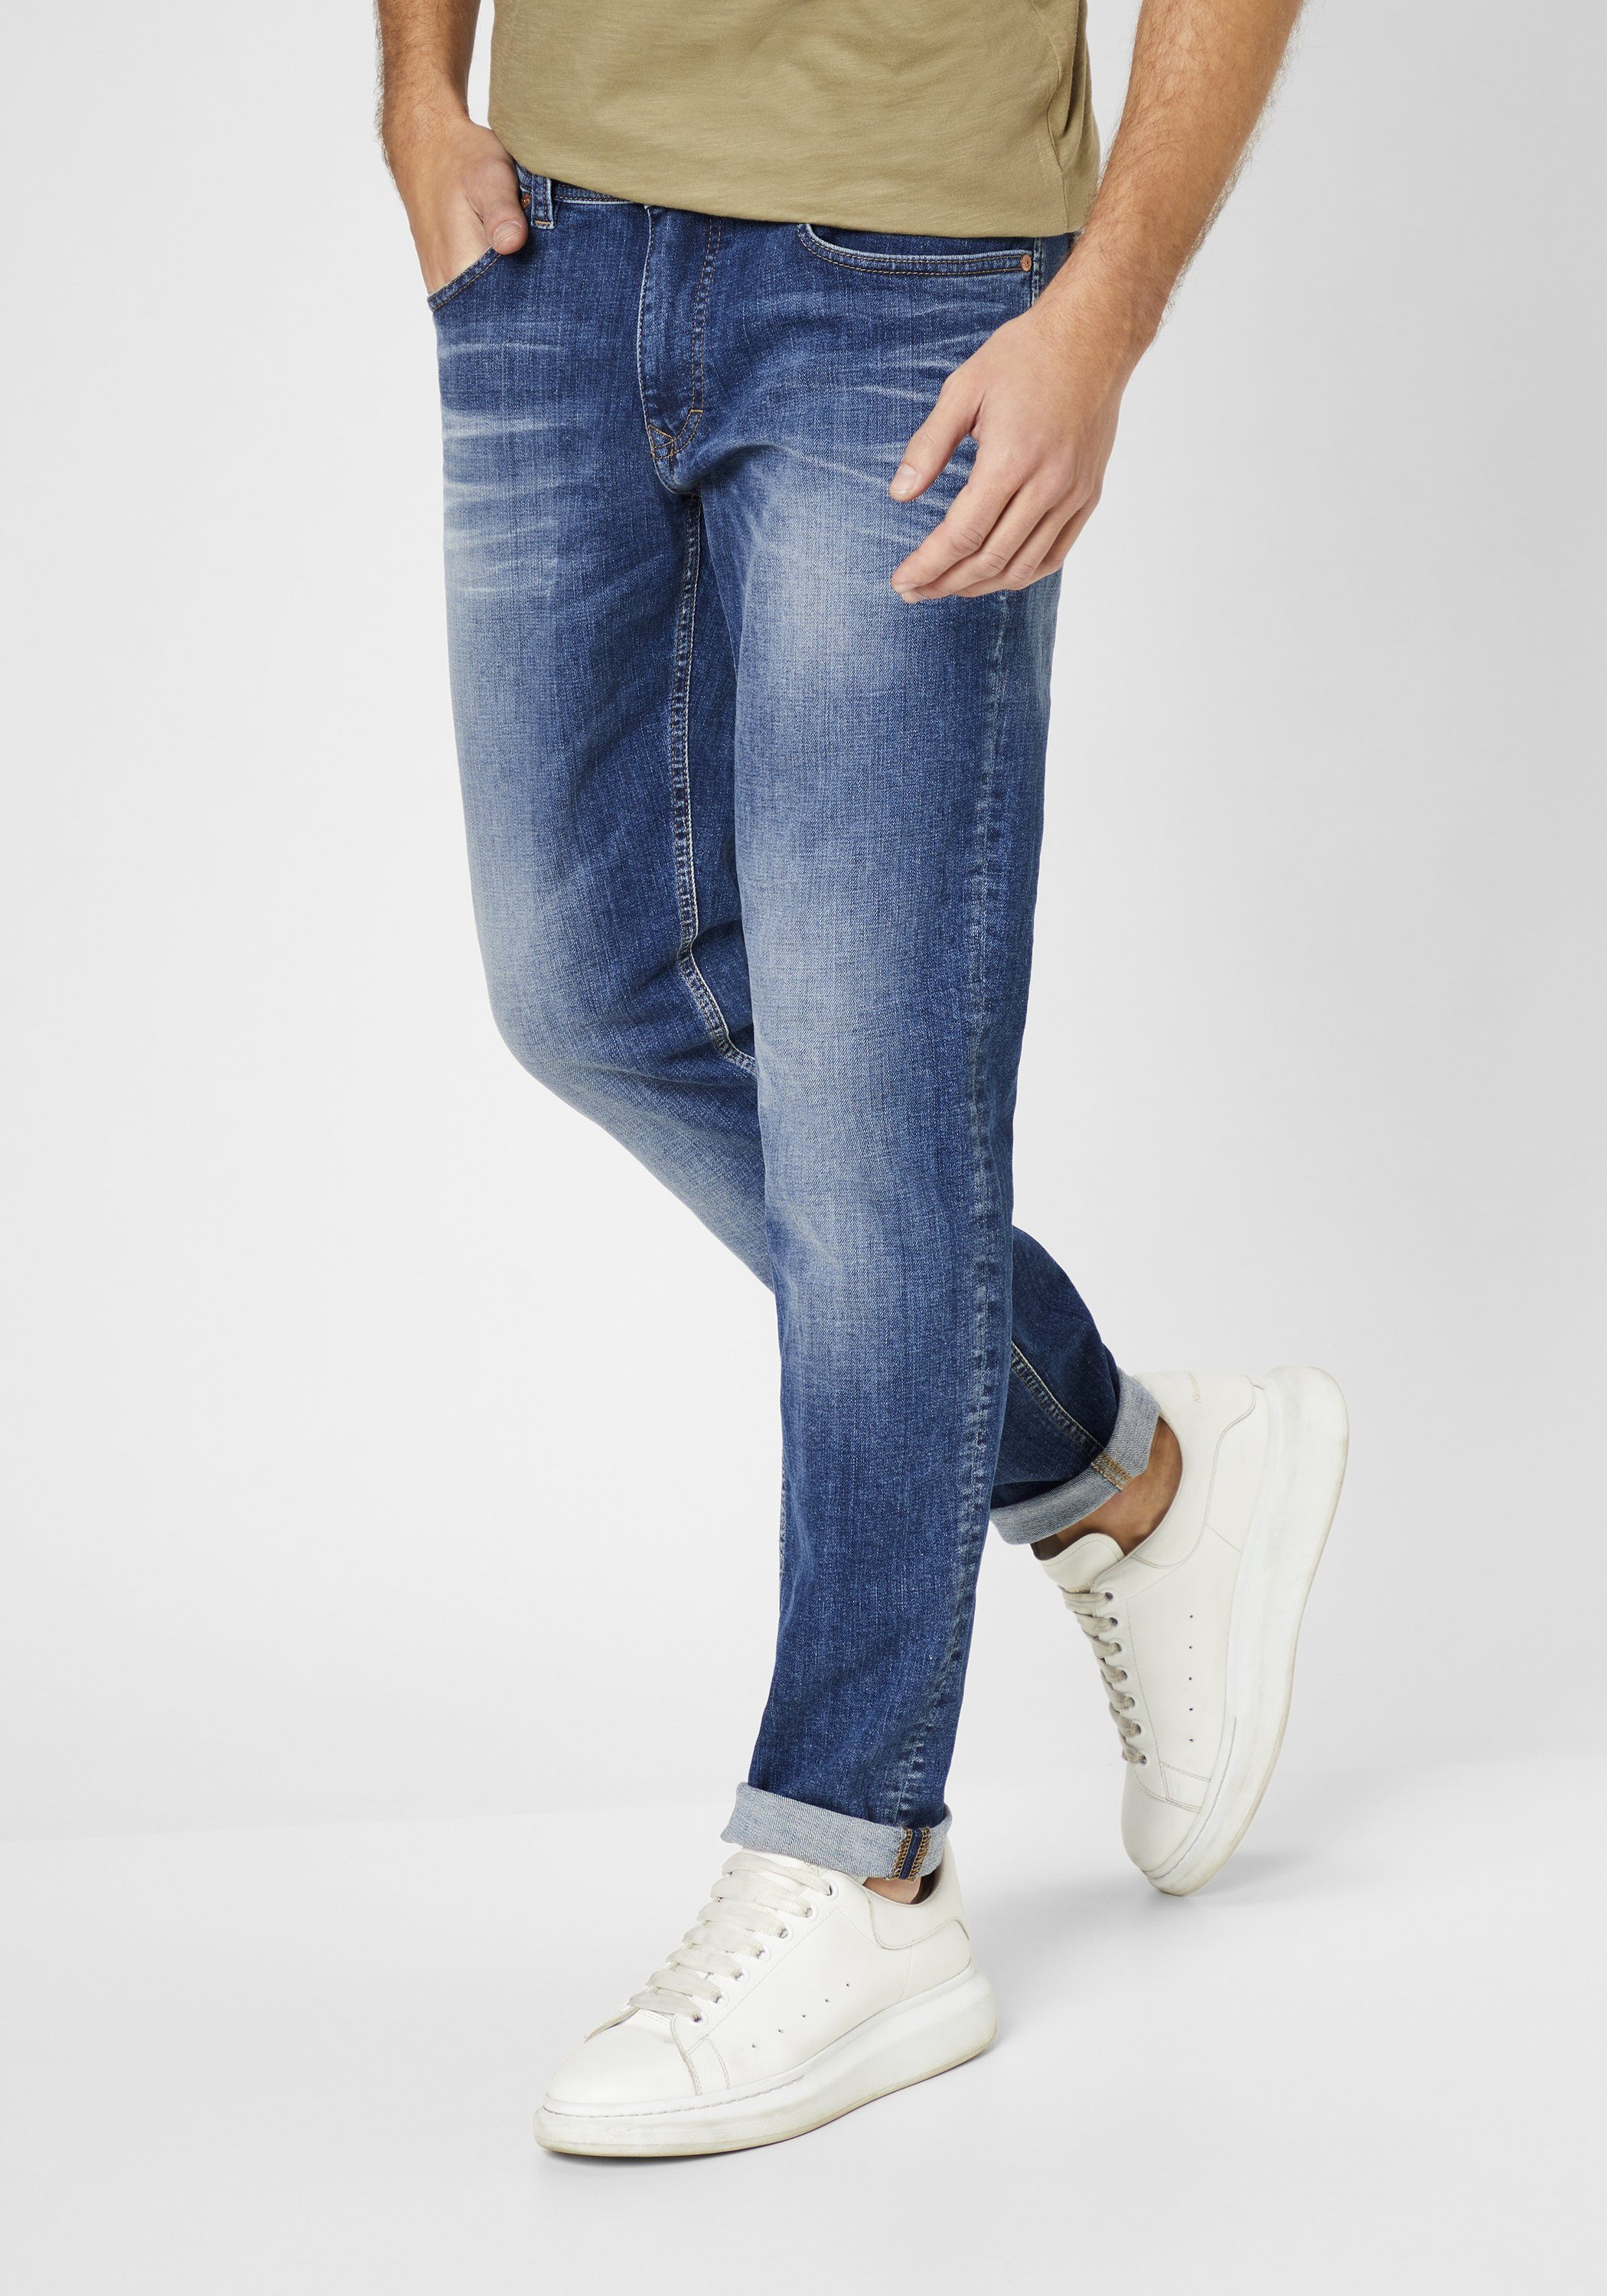 blue wash DEAN Jeanshose vintage Stretch Slim-fit-Jeans Paddock's mit